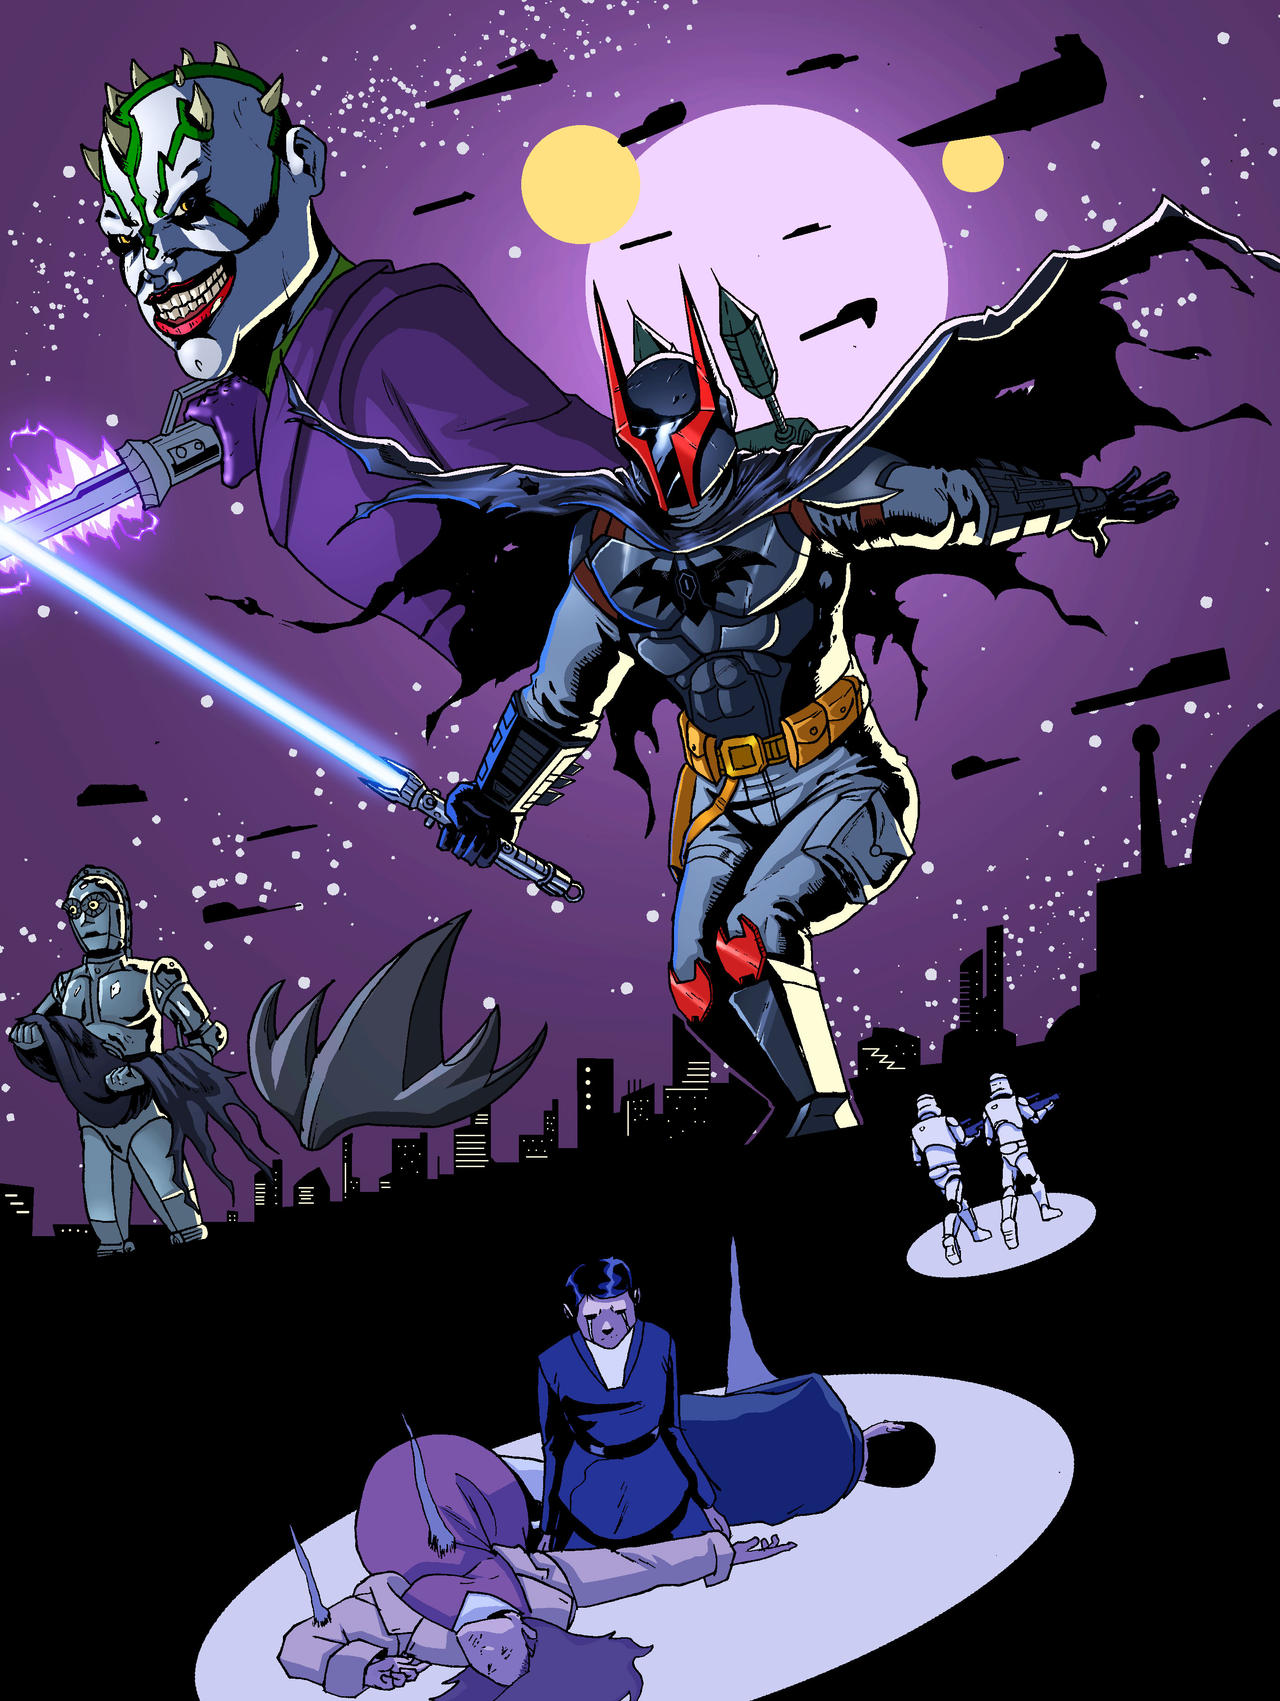 The Batman(dalorian) (Star Wars/DC Crossover) by bnelson19 on DeviantArt